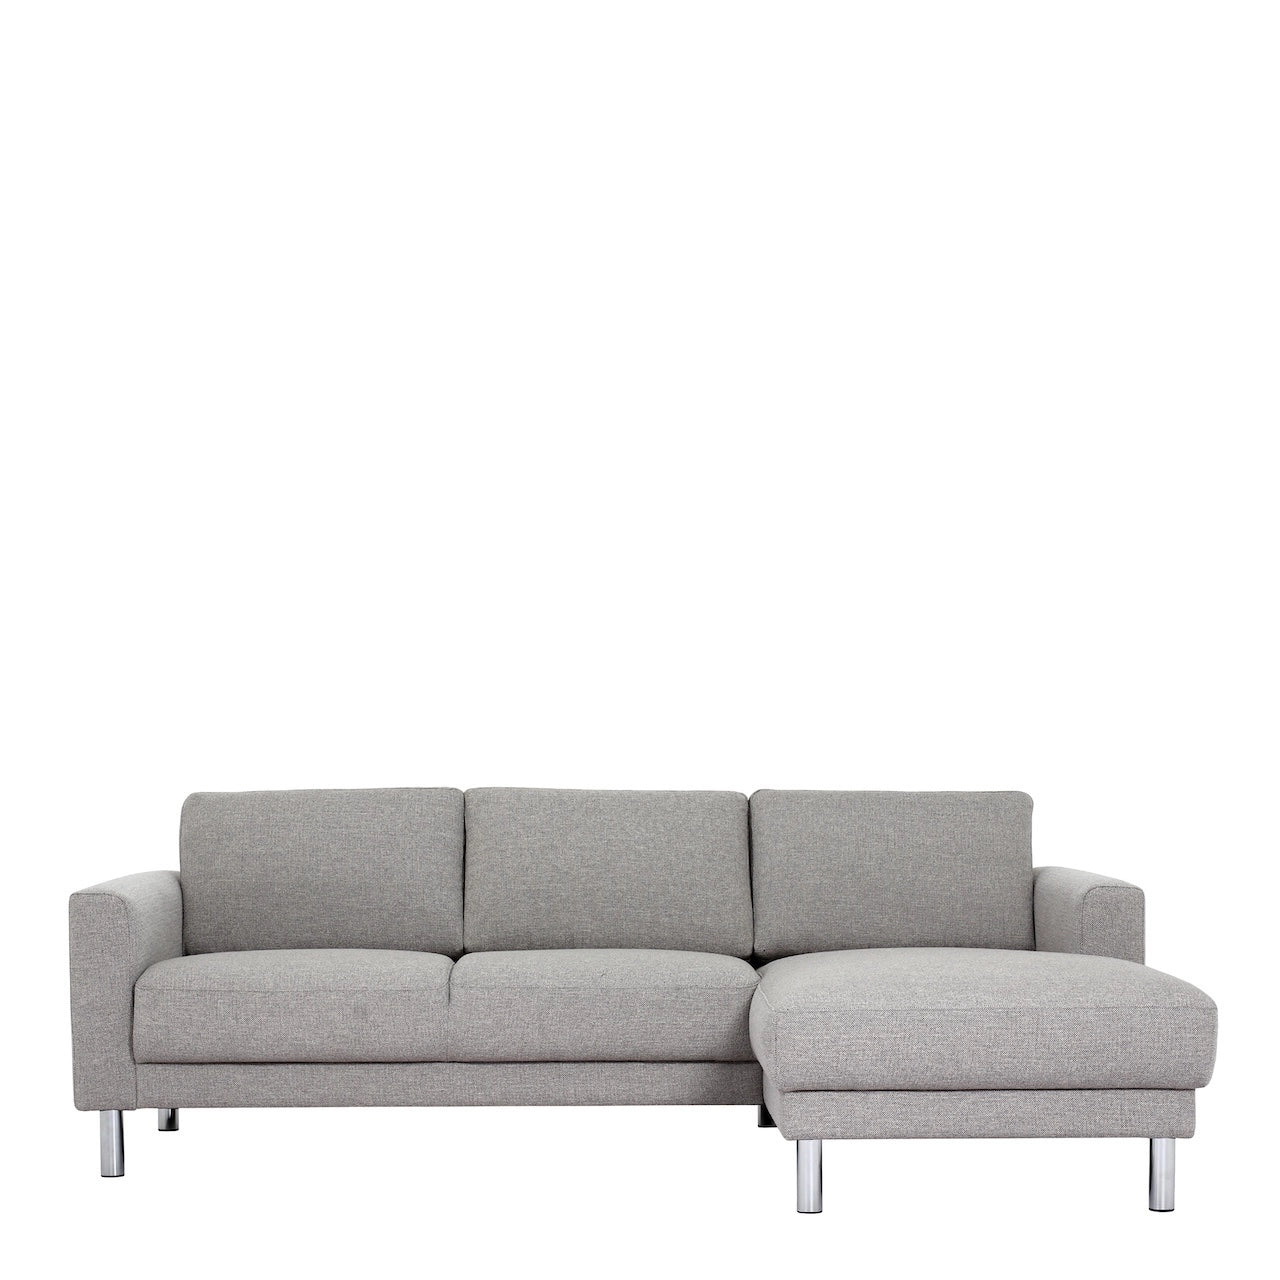 Furniture To Go Cleveland Chaiselongue Sofa (RH) in Nova Light Grey